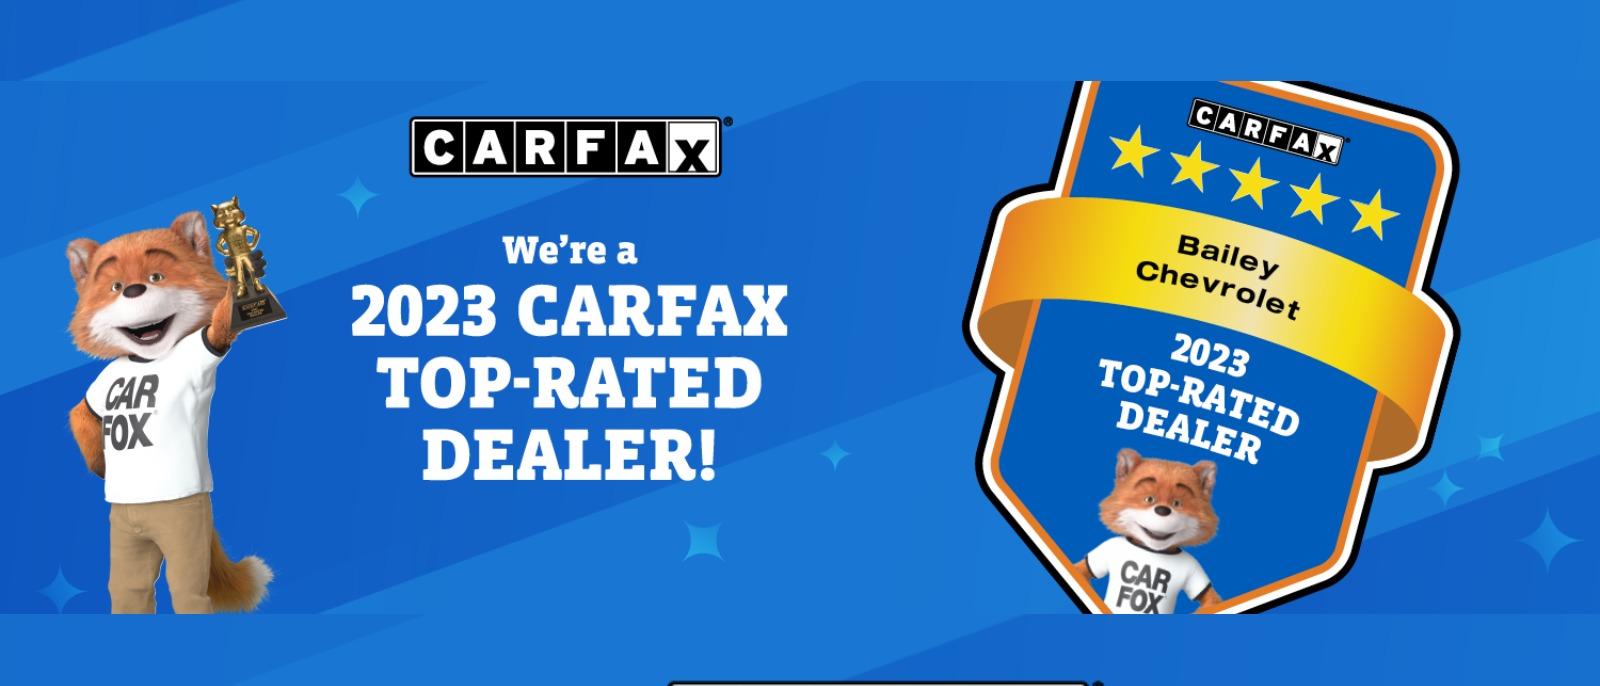 2023 CARFAX Top-rated dealer